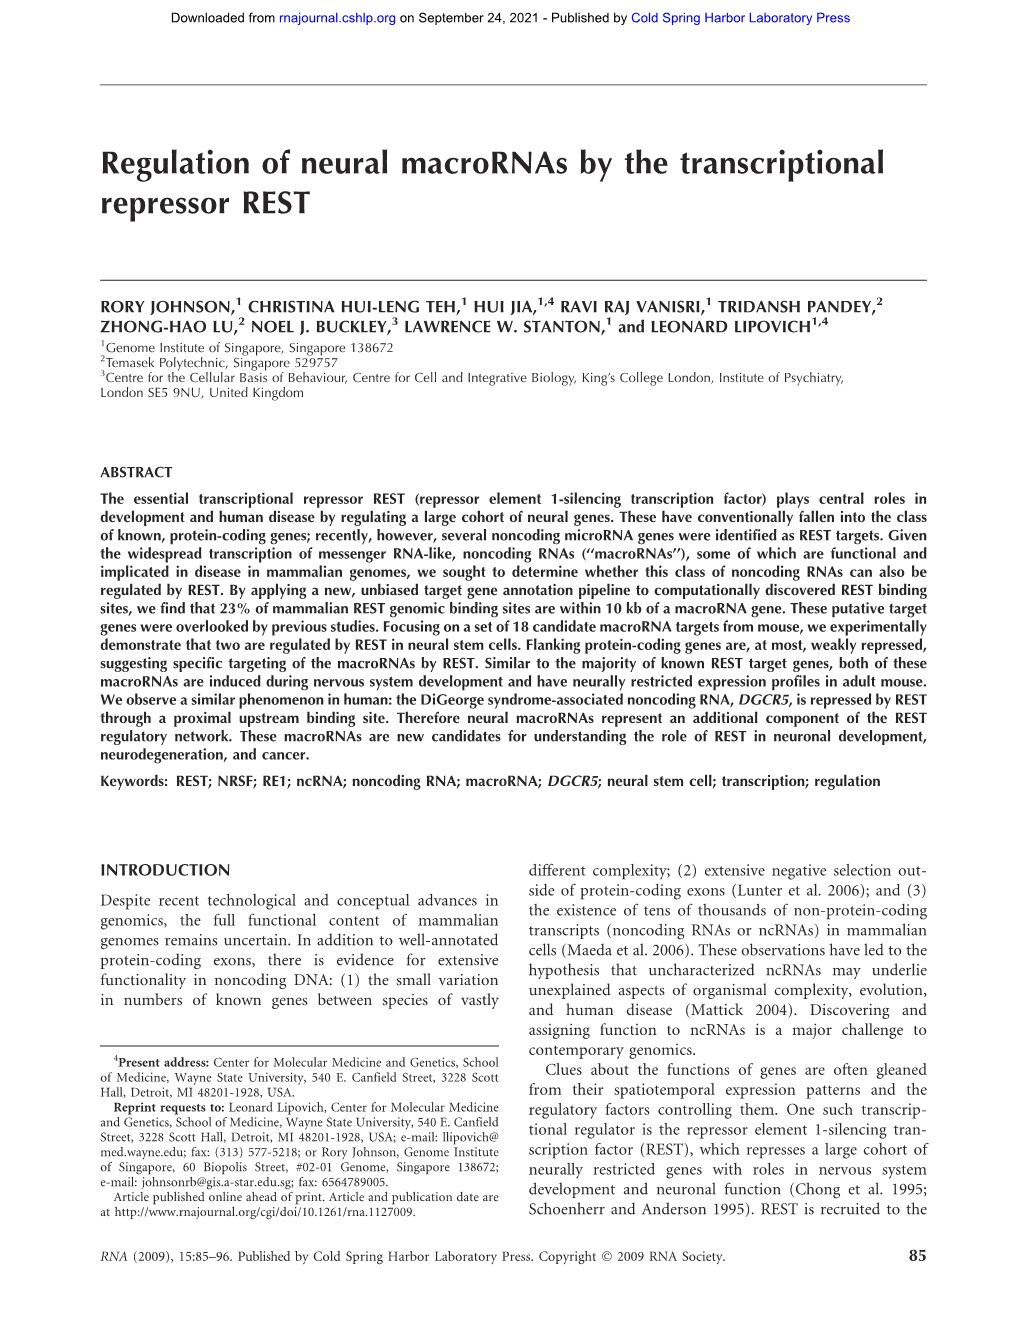 Regulation of Neural Macrornas by the Transcriptional Repressor REST